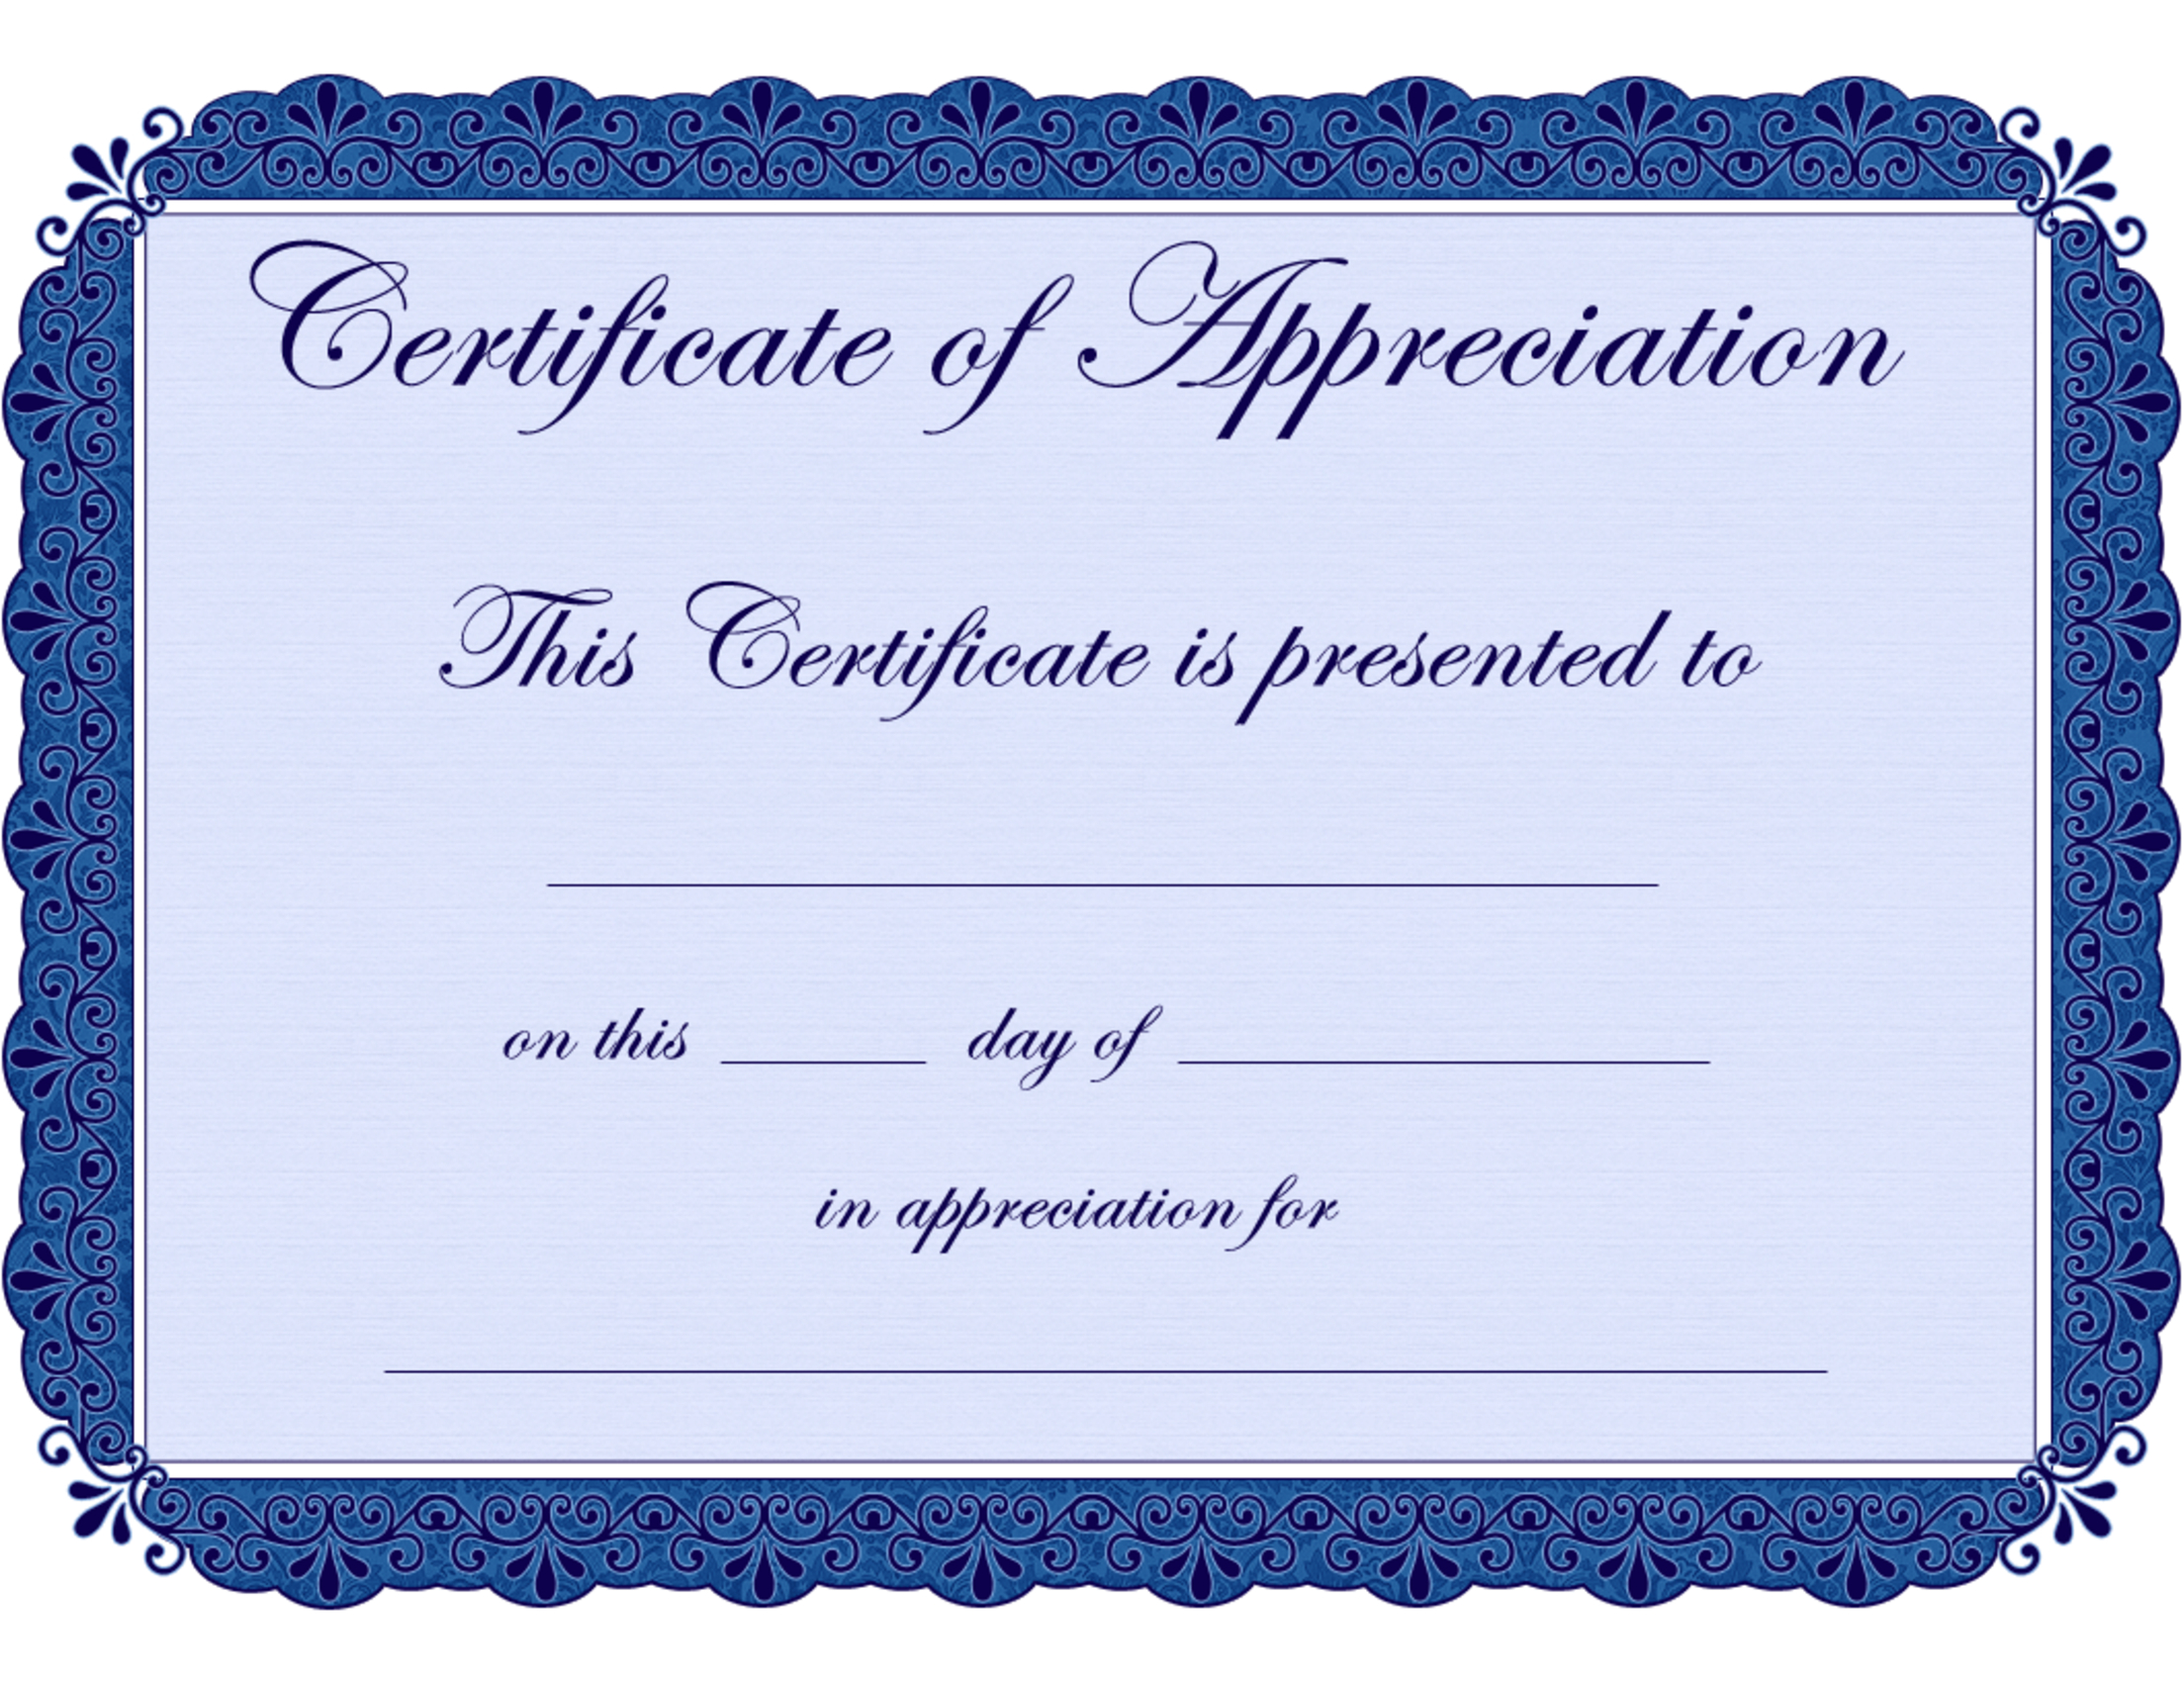 Free Printable Certificates Certificate Of Appreciation Certificate throughout Certificate Of Appreciation Template Free Printable